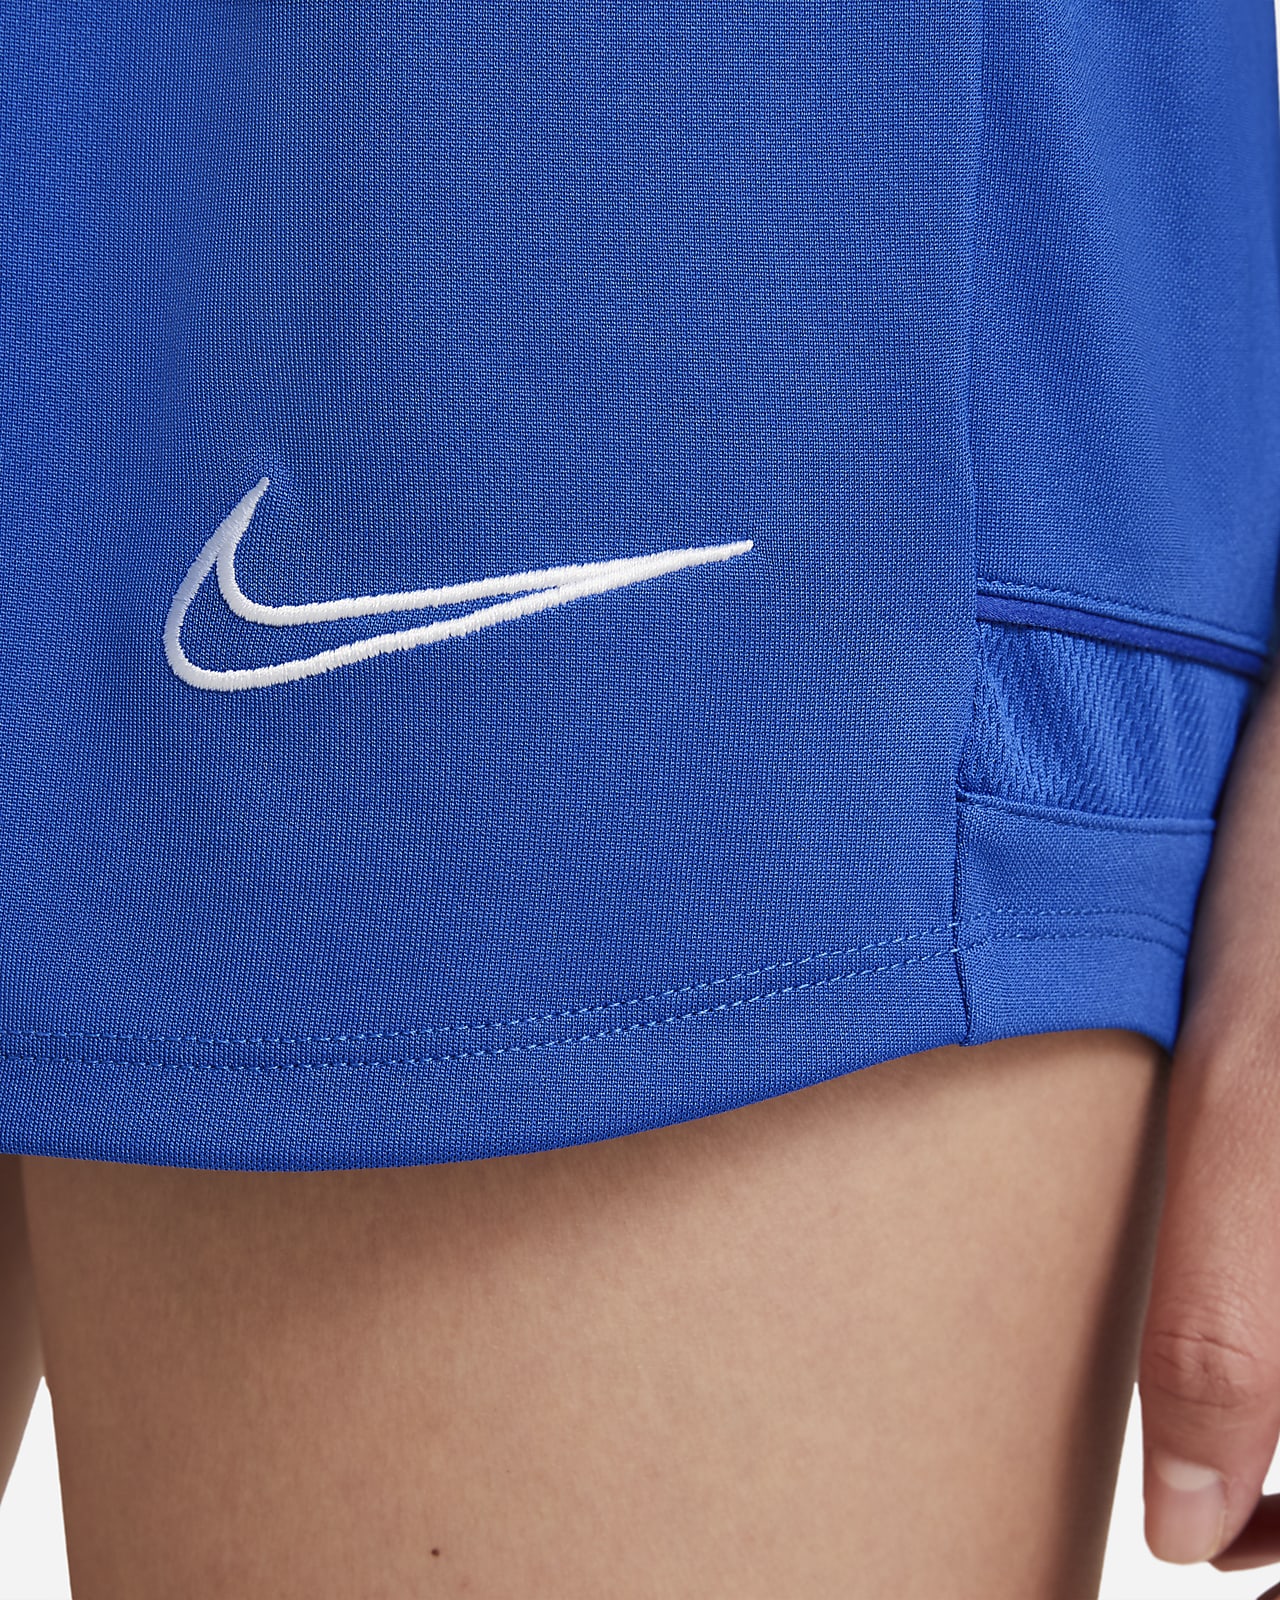 Nike Dri Fit Academy Women S Knit Soccer Shorts Nike Com